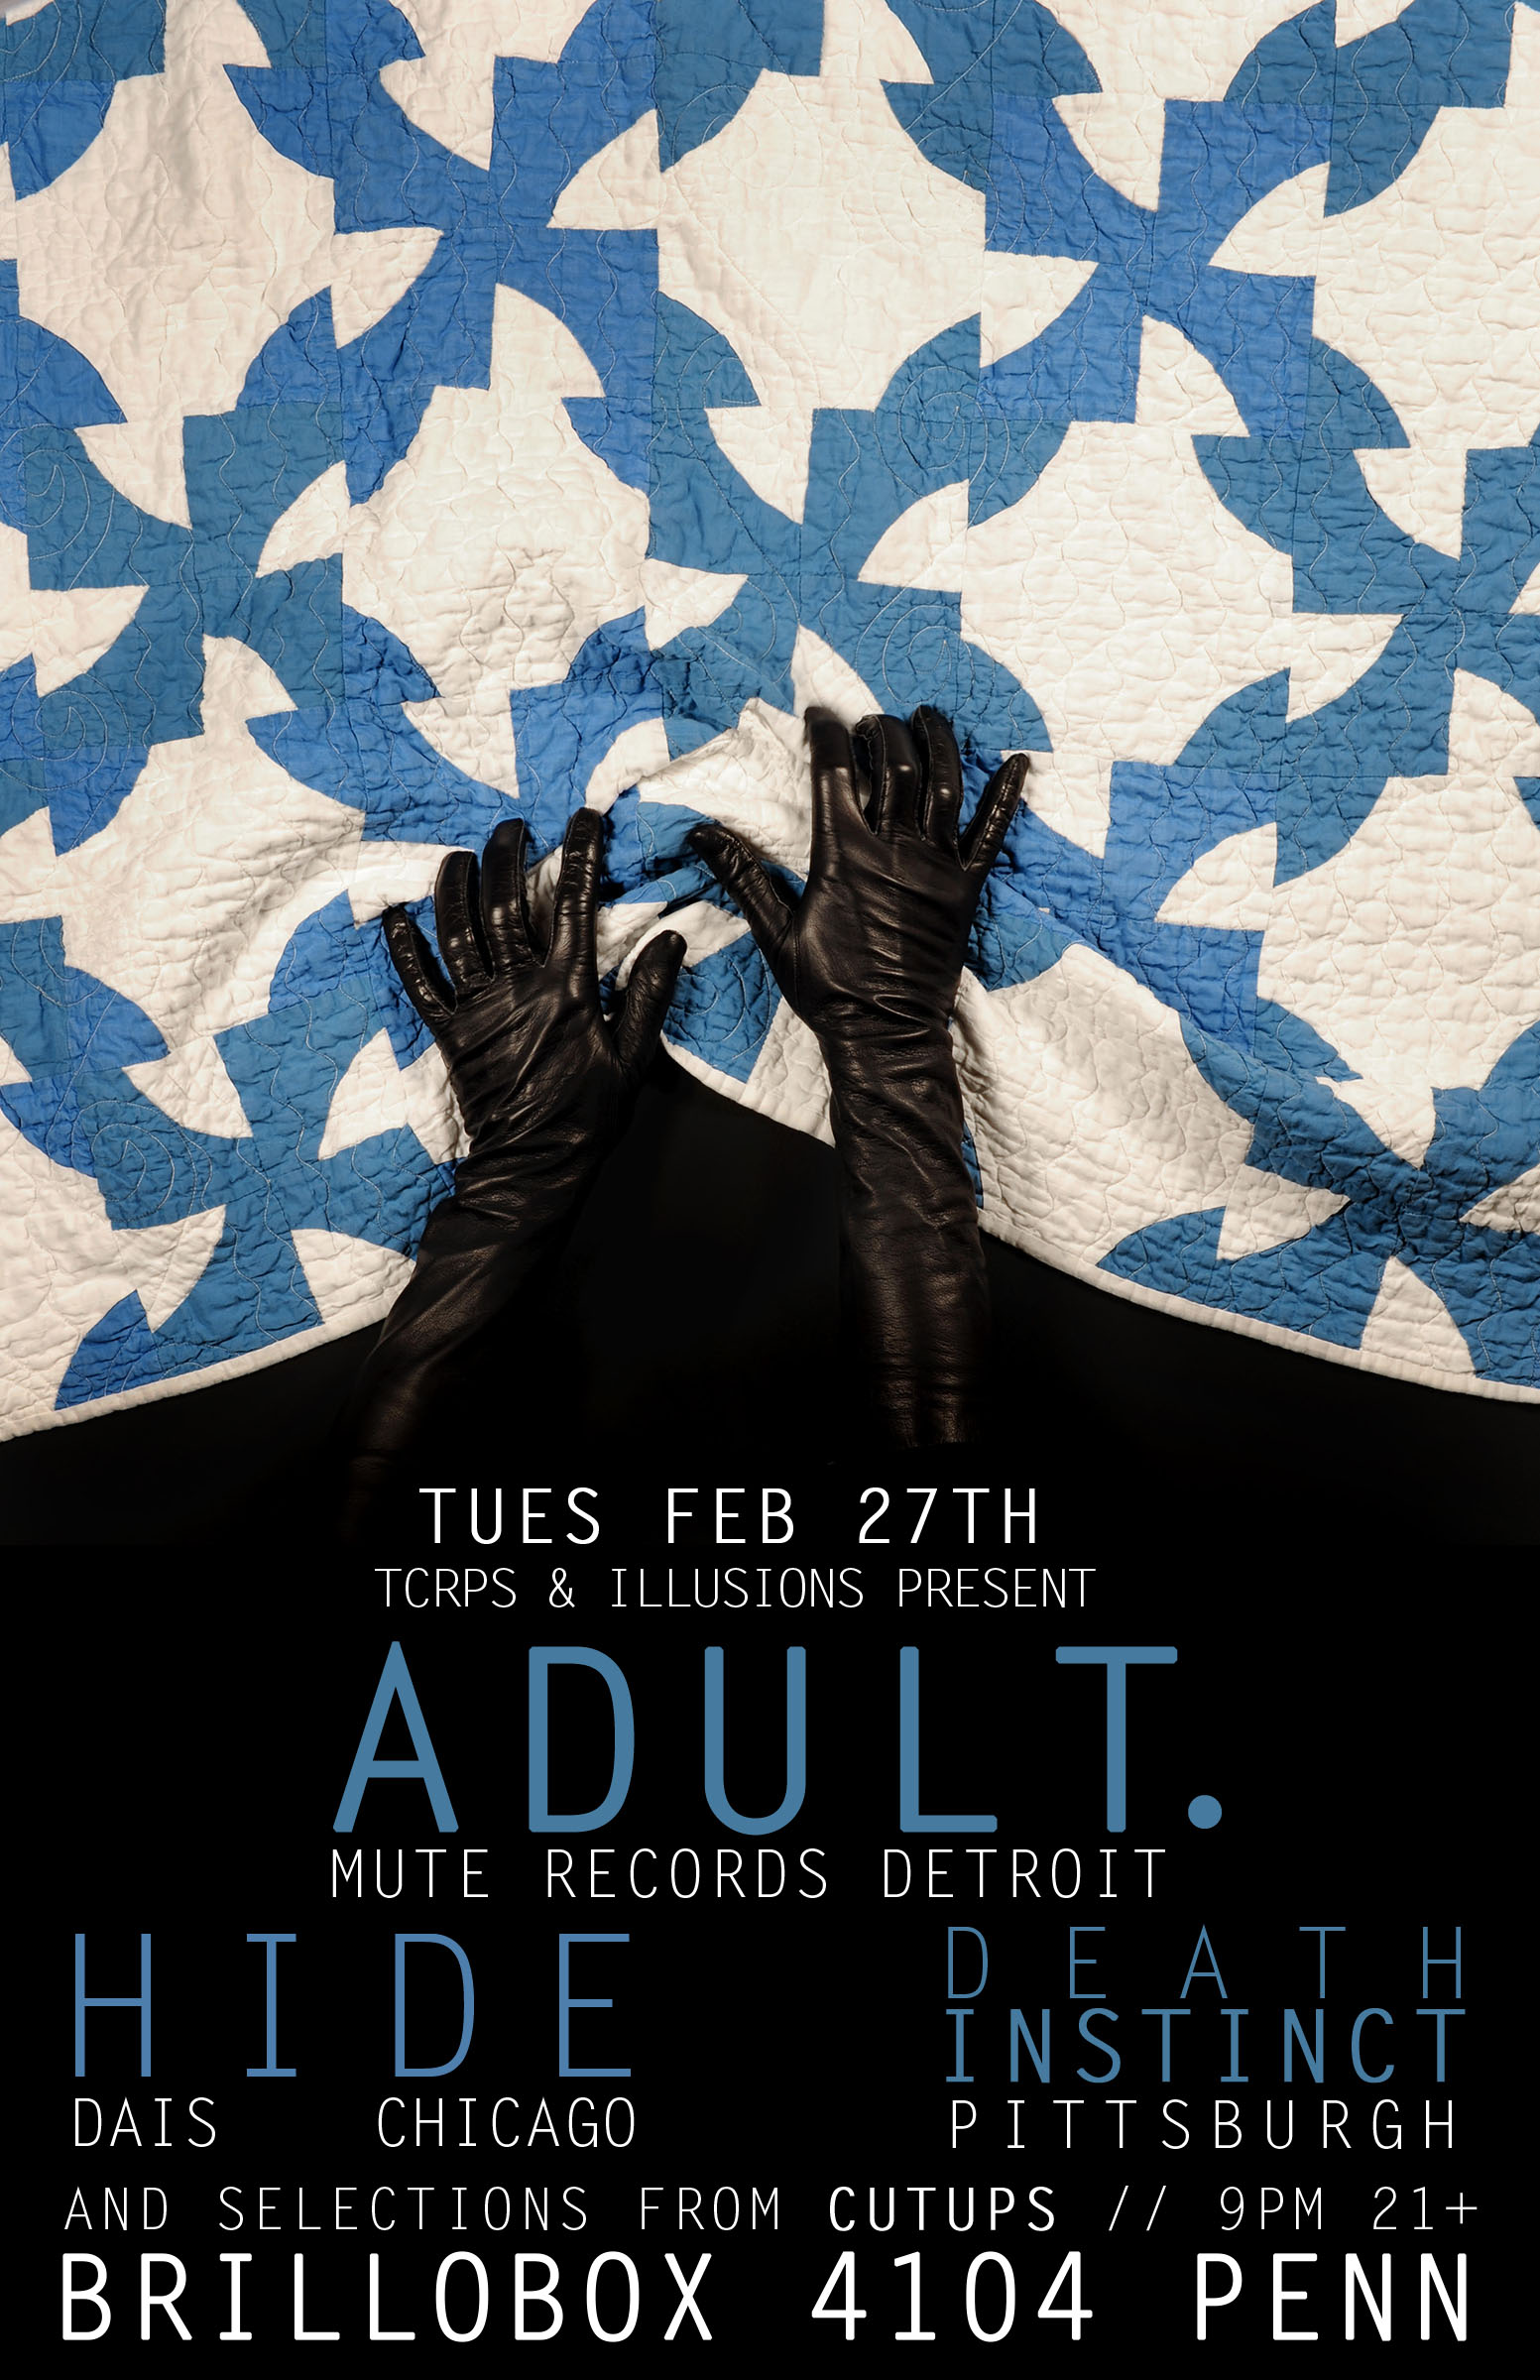 Tue Feb 27th ADULT. [Mute Records: Detroit] + HIDE [Dais Records: Chicago] + Death Instinct @ Brillobox